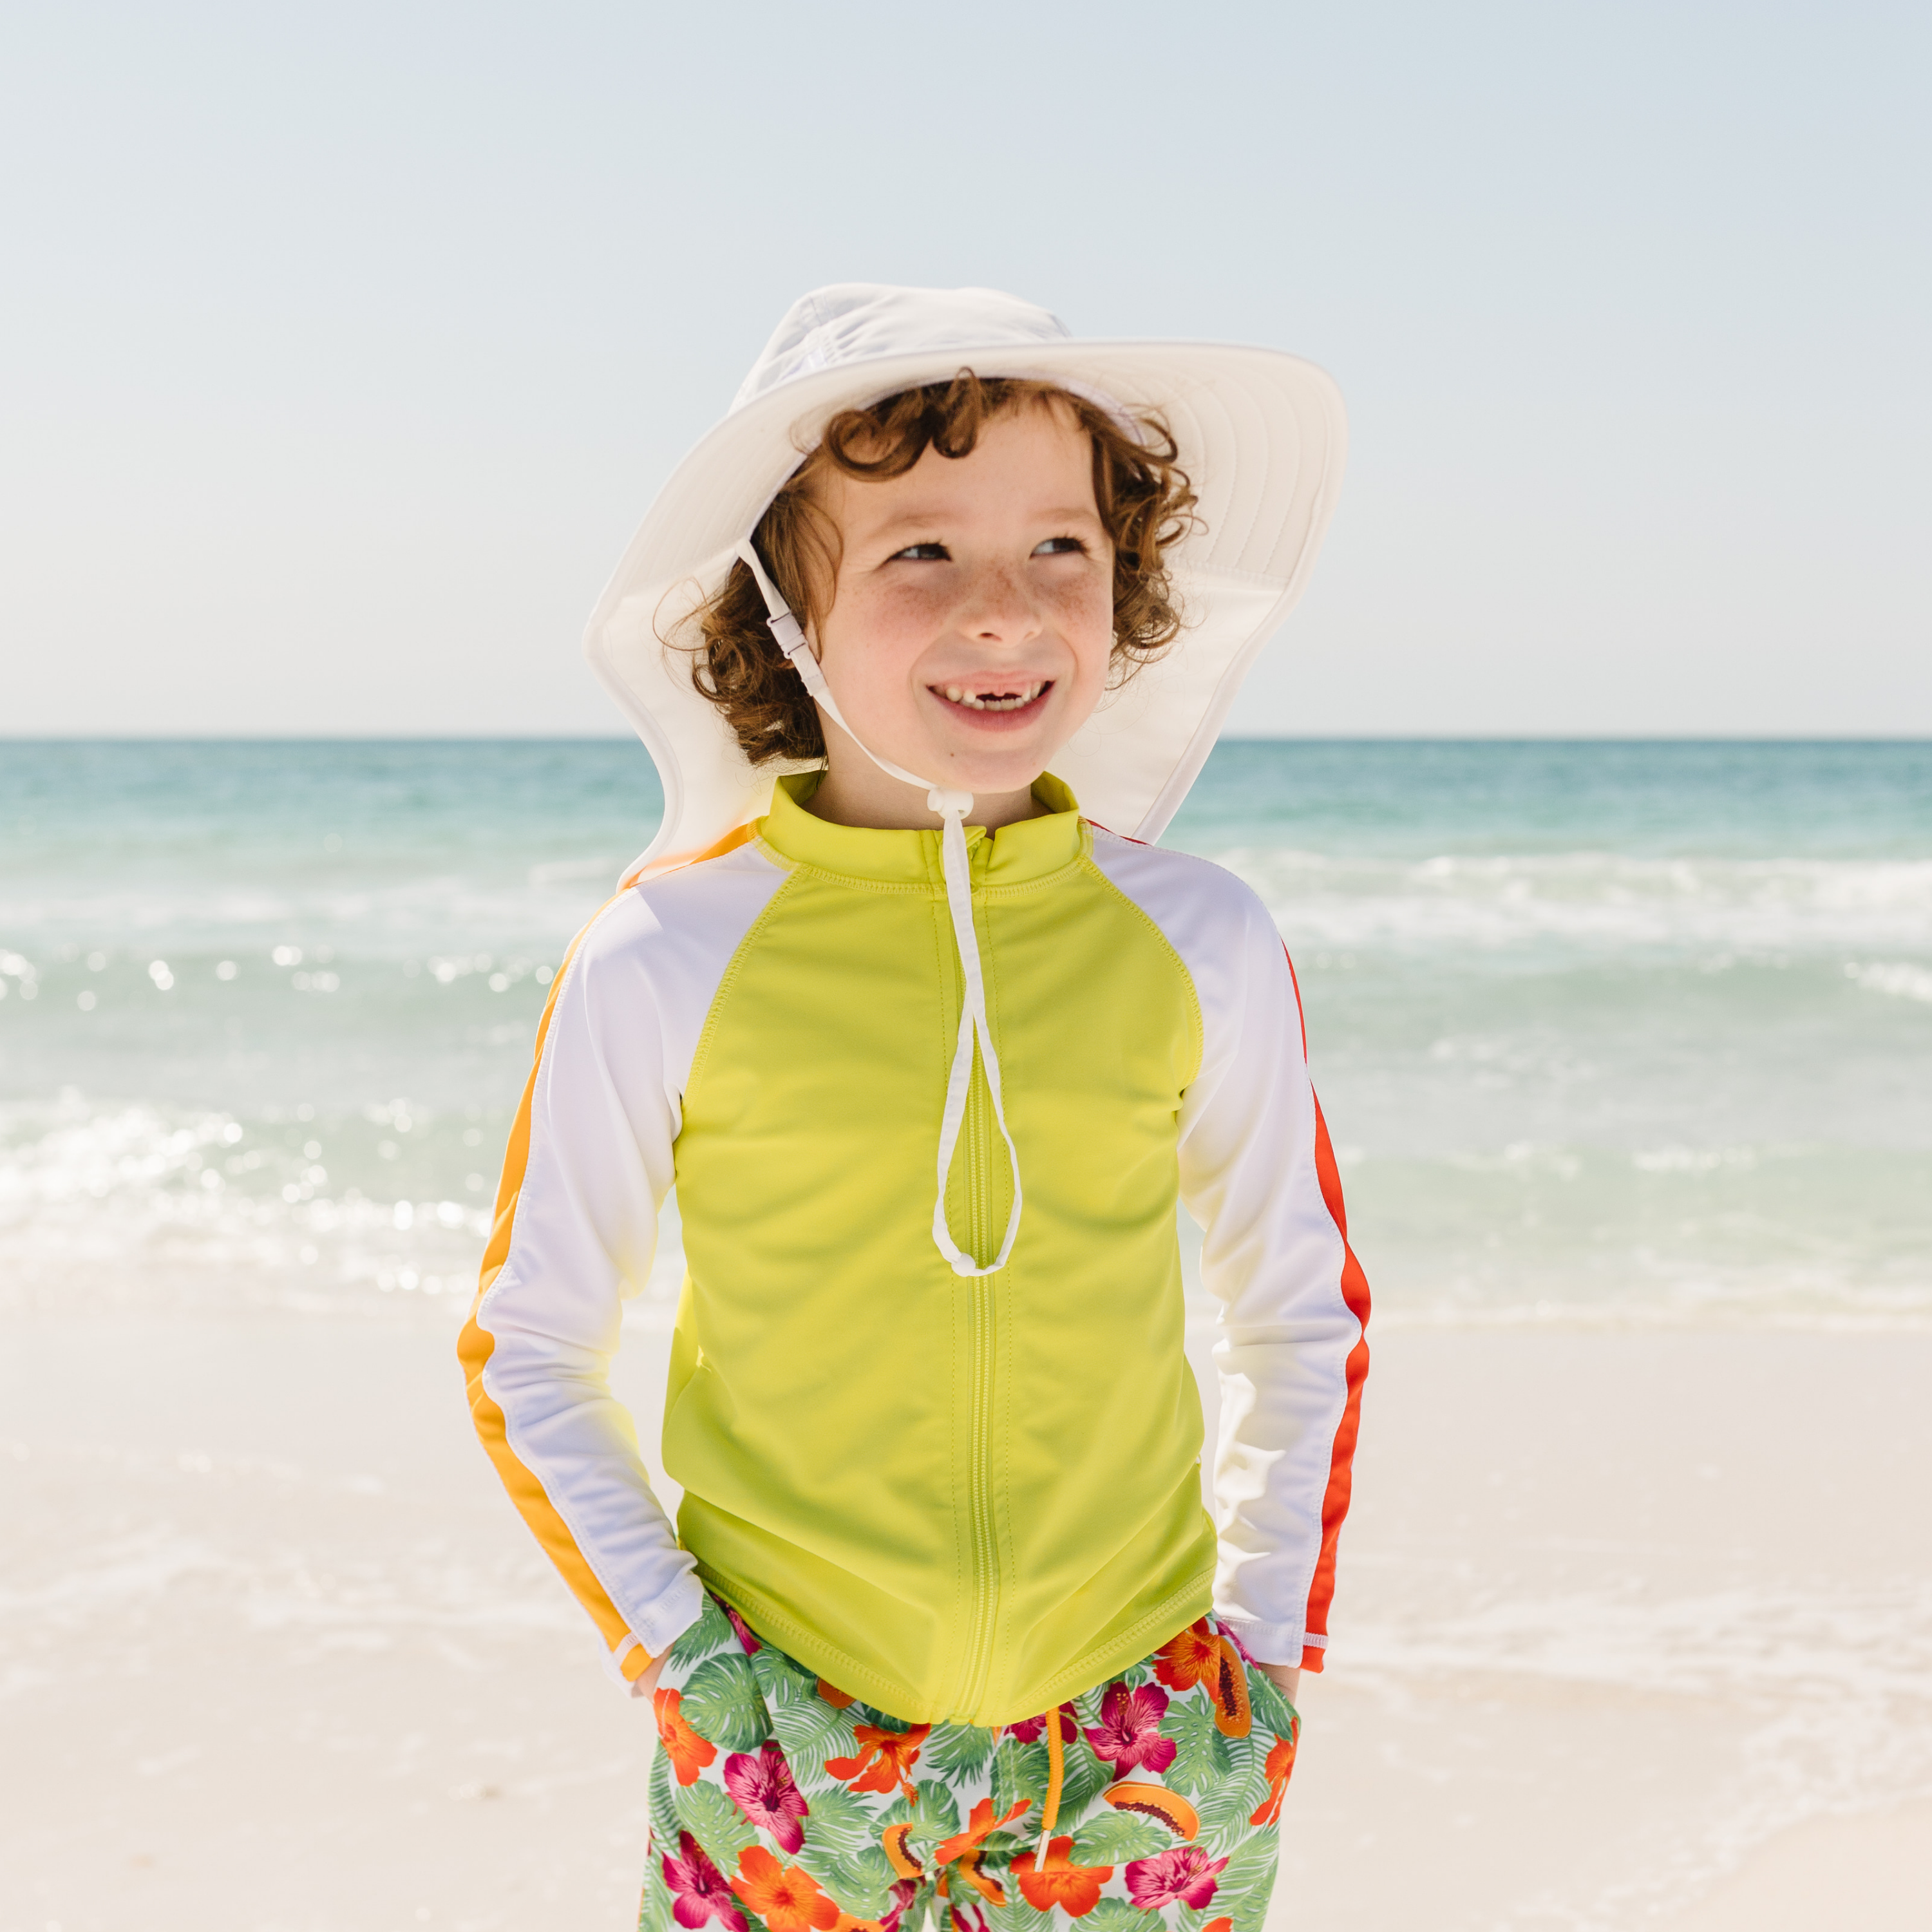 SwimZip Kids Wide Brim + Flap Neck Sun Protective Adventure Hat - Aqua Sky 6-24 Month / Aqua Sky